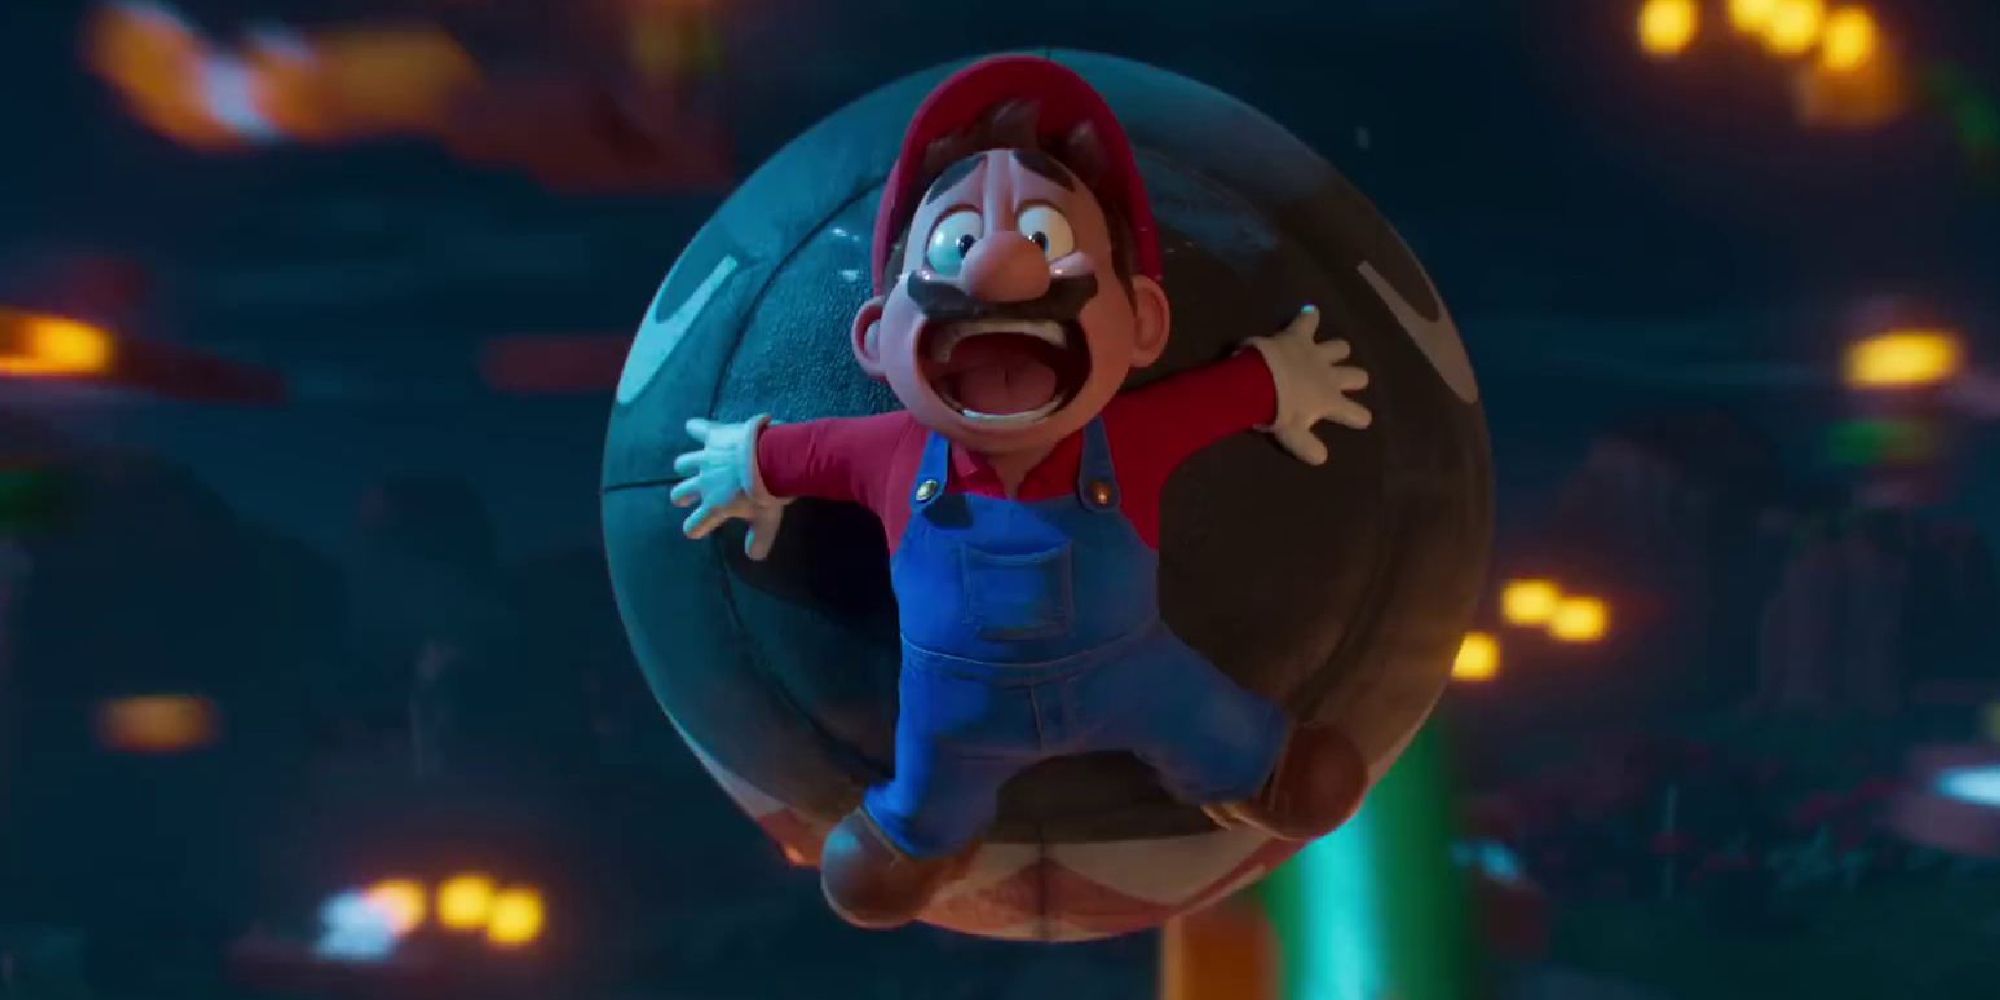 Chris Pratt Backs the Writers, Says No ‘Super Mario Bros. 2’ Until the Strike Is Resolved